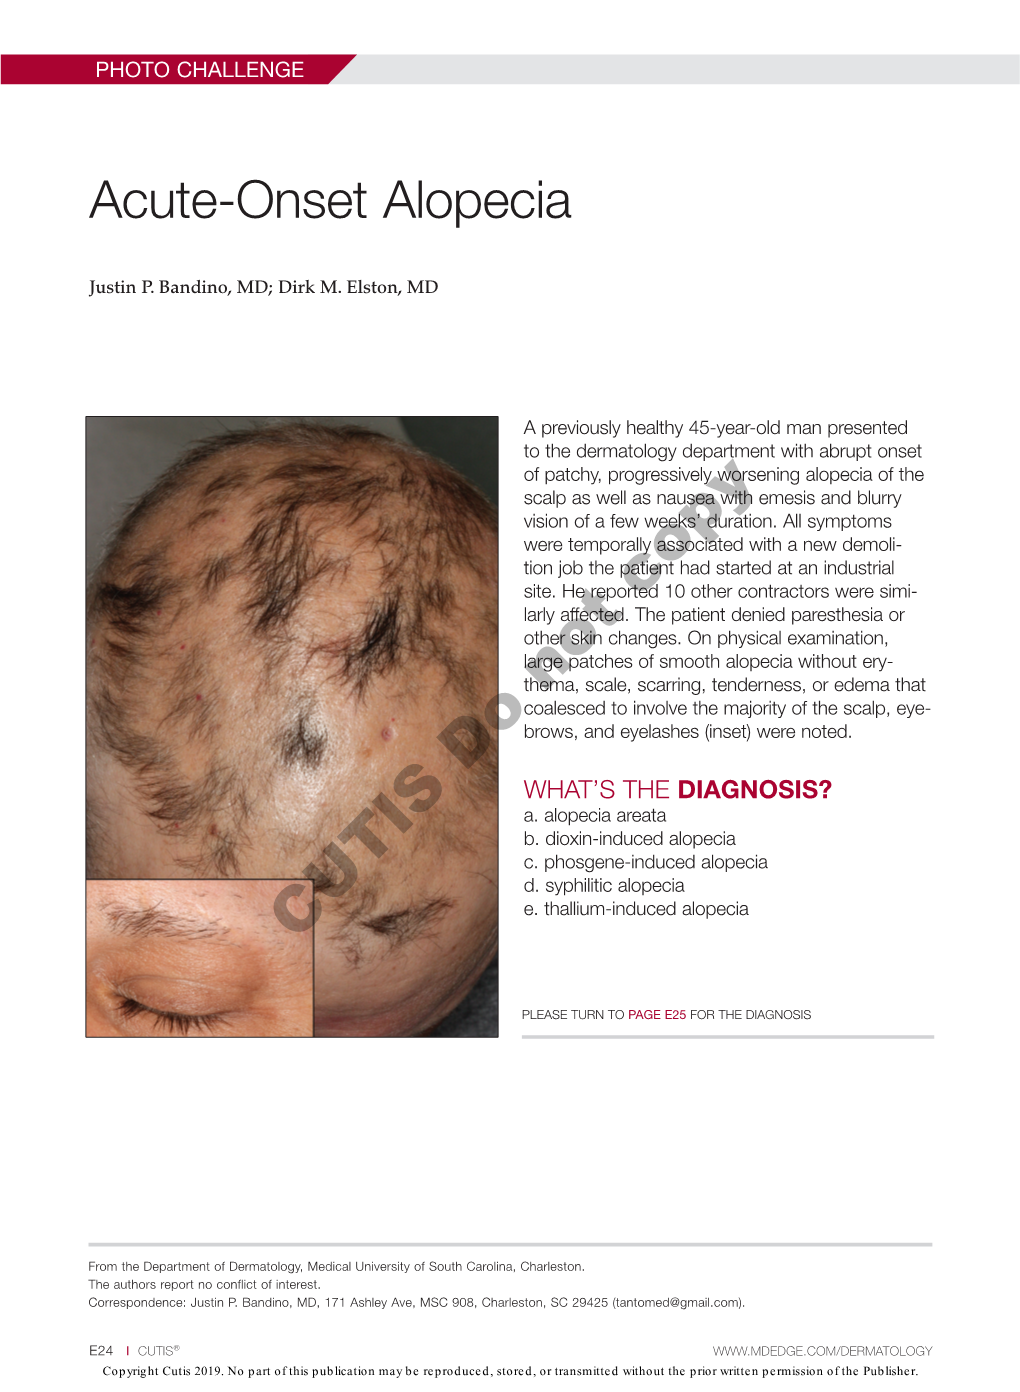 Acute-Onset Alopecia